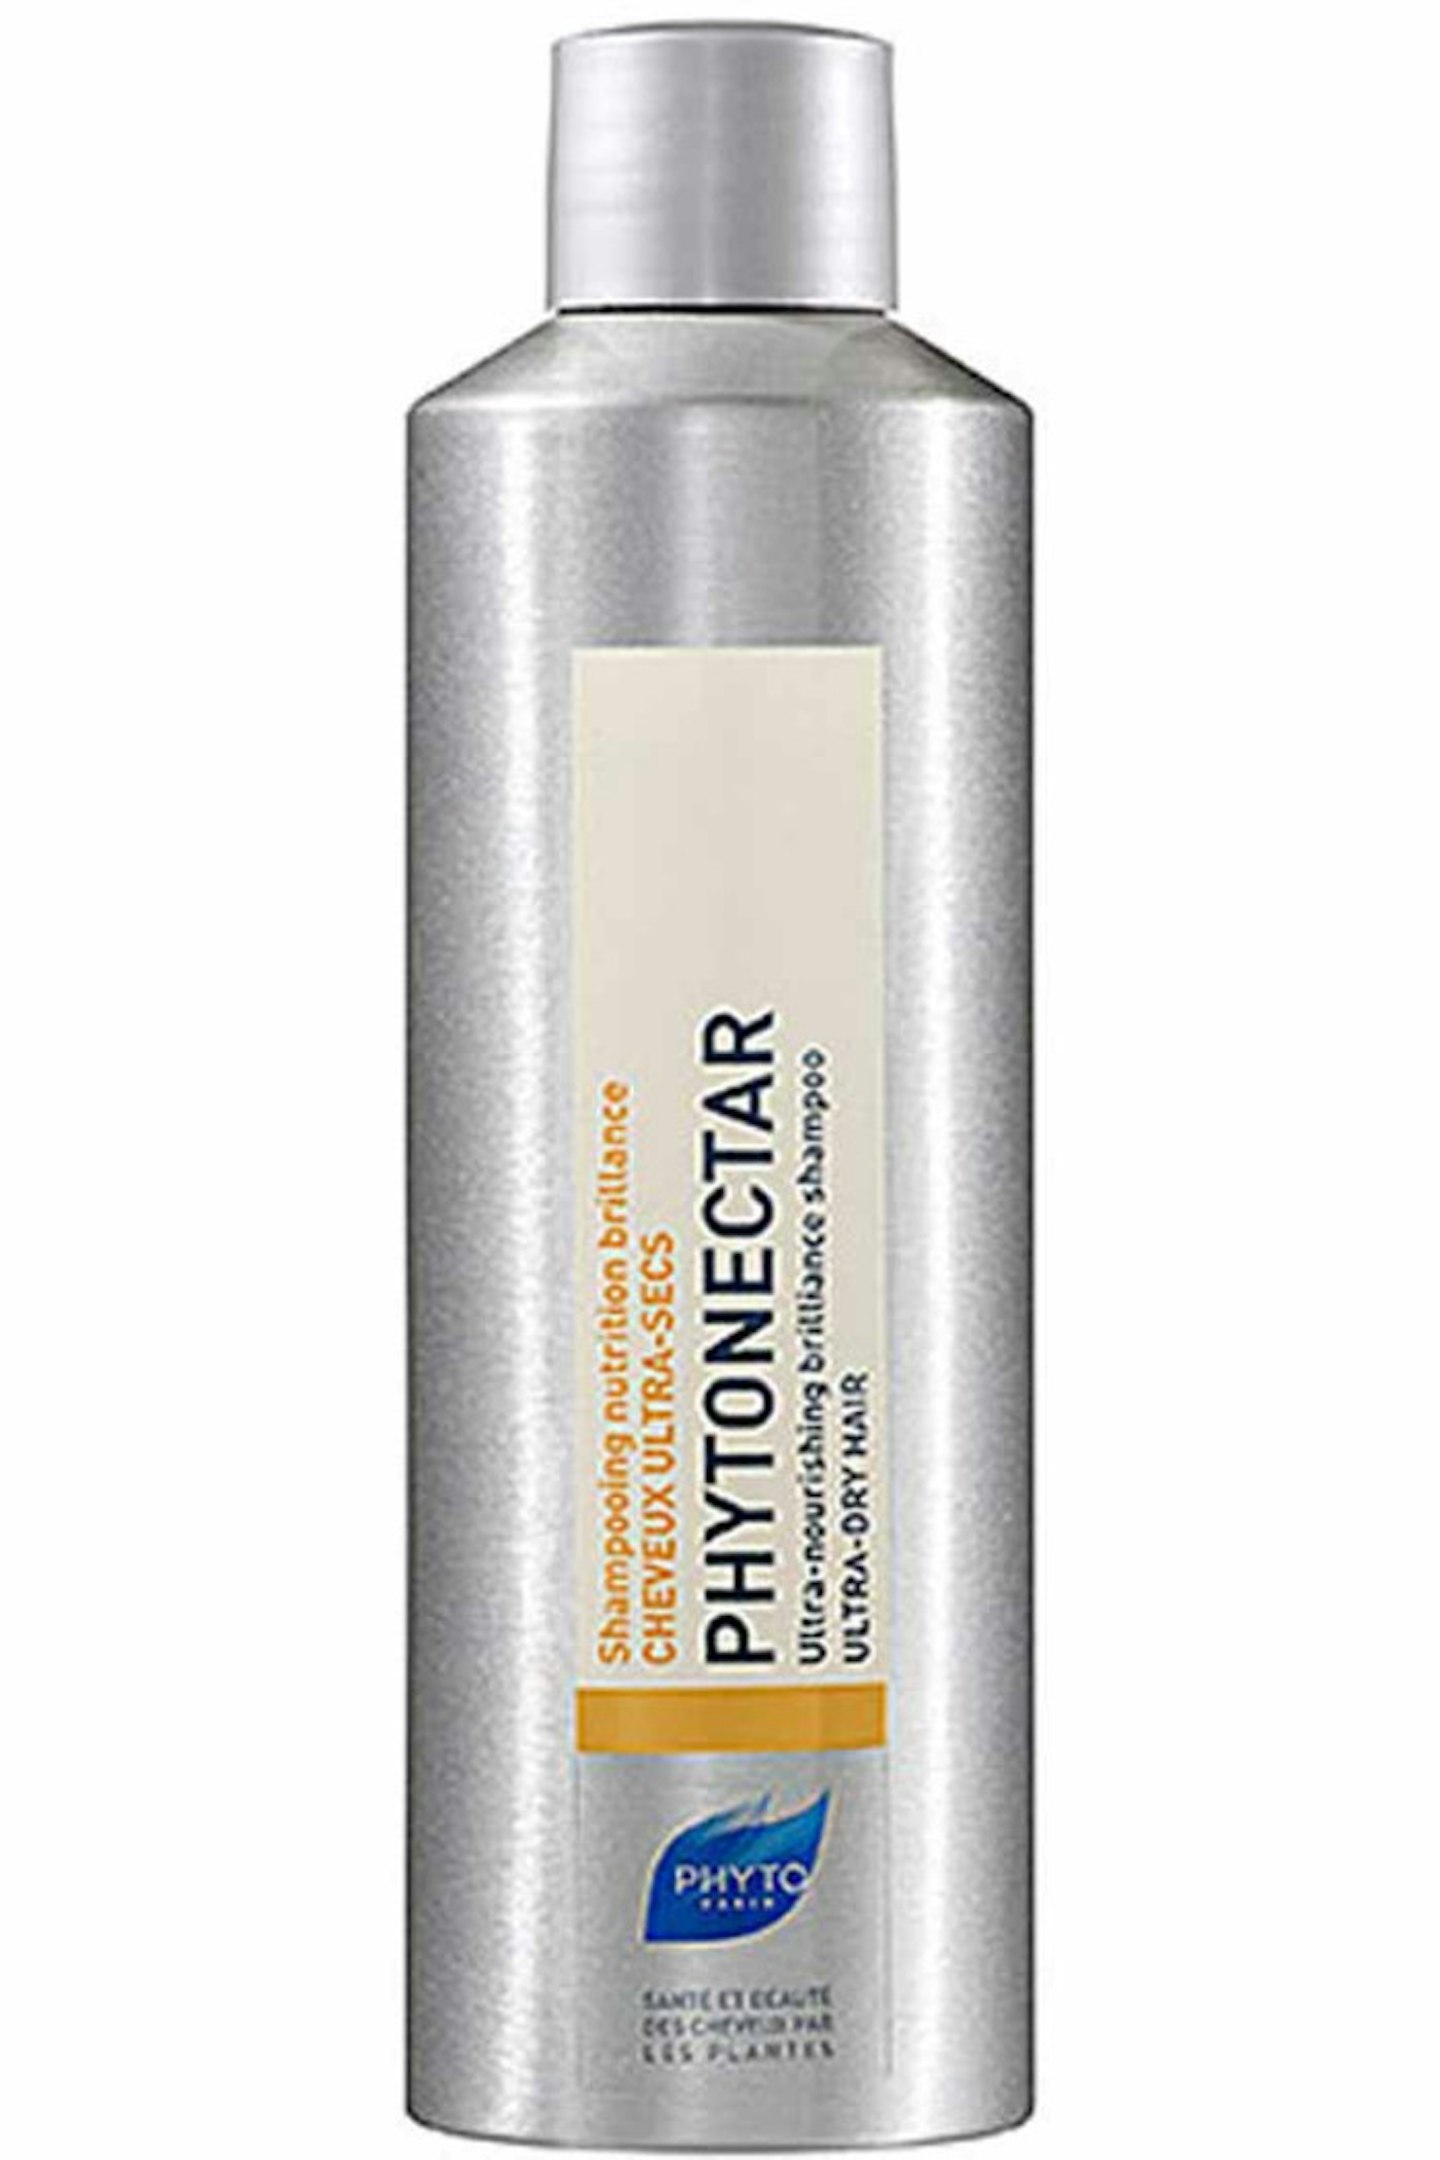 8. Phyto Phytonectar Ultra-Nourishing Brilliance Shampoo, £12.50